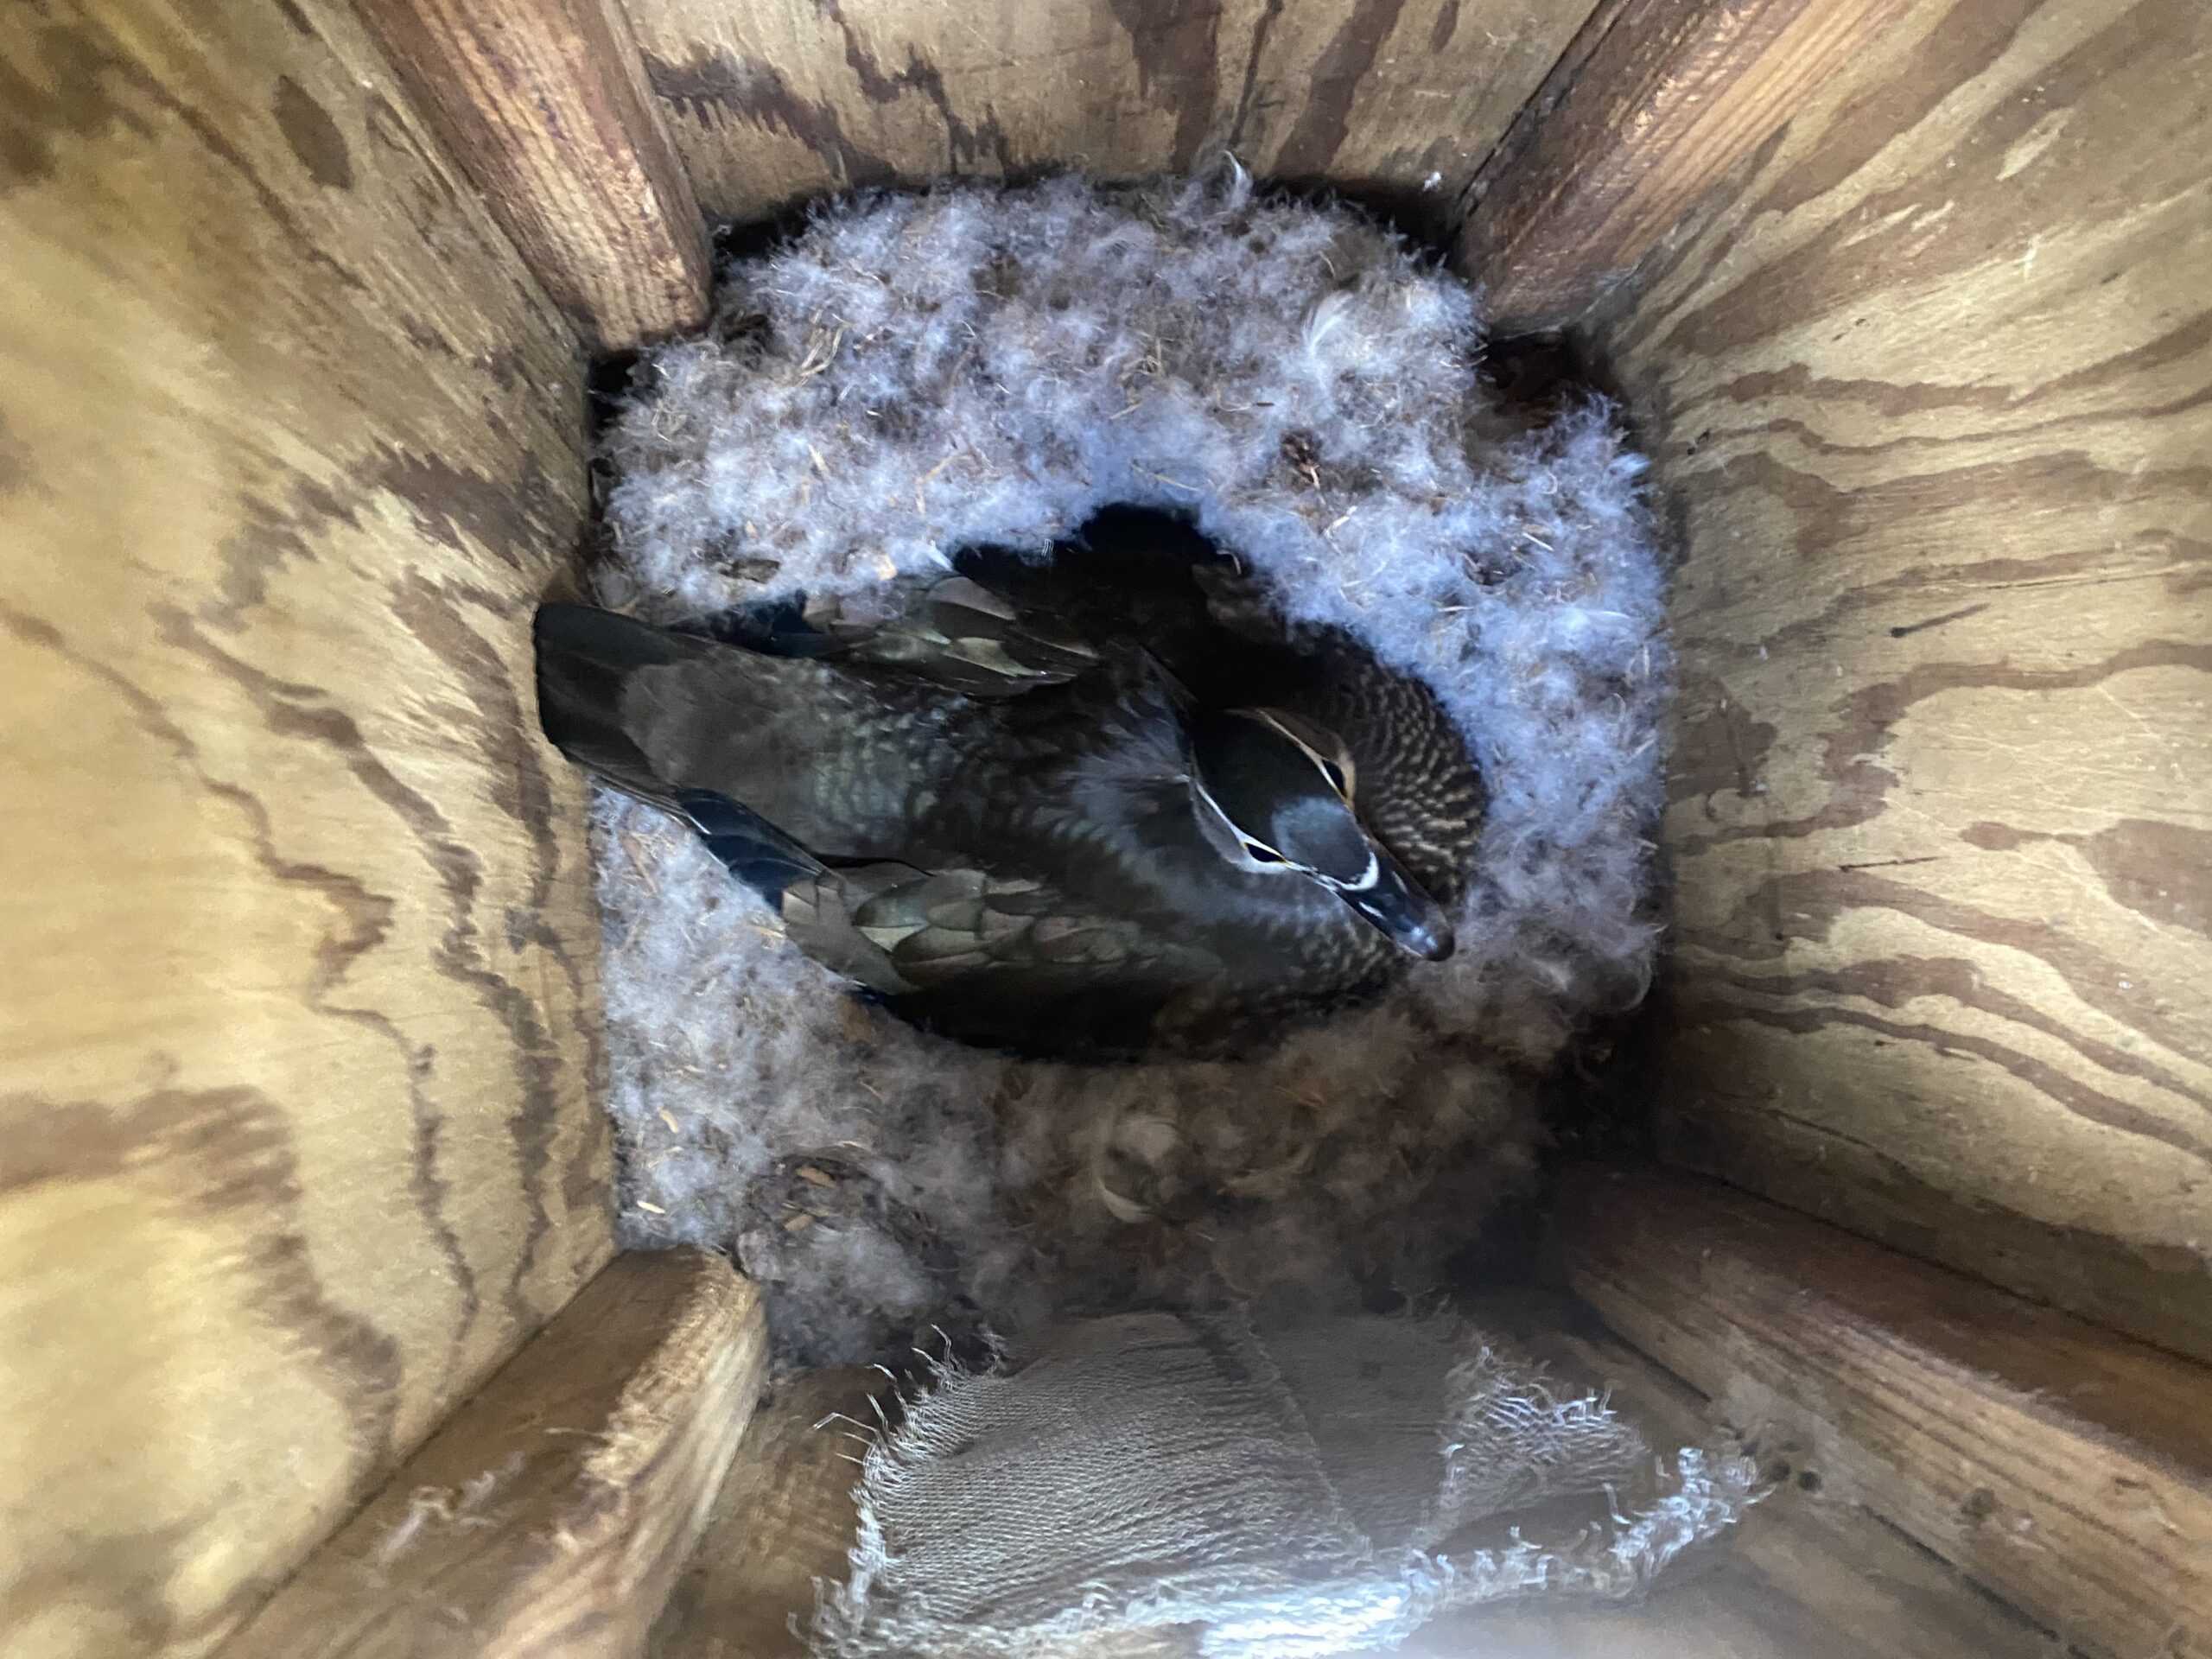 A nesting Hen Wood duck on nest